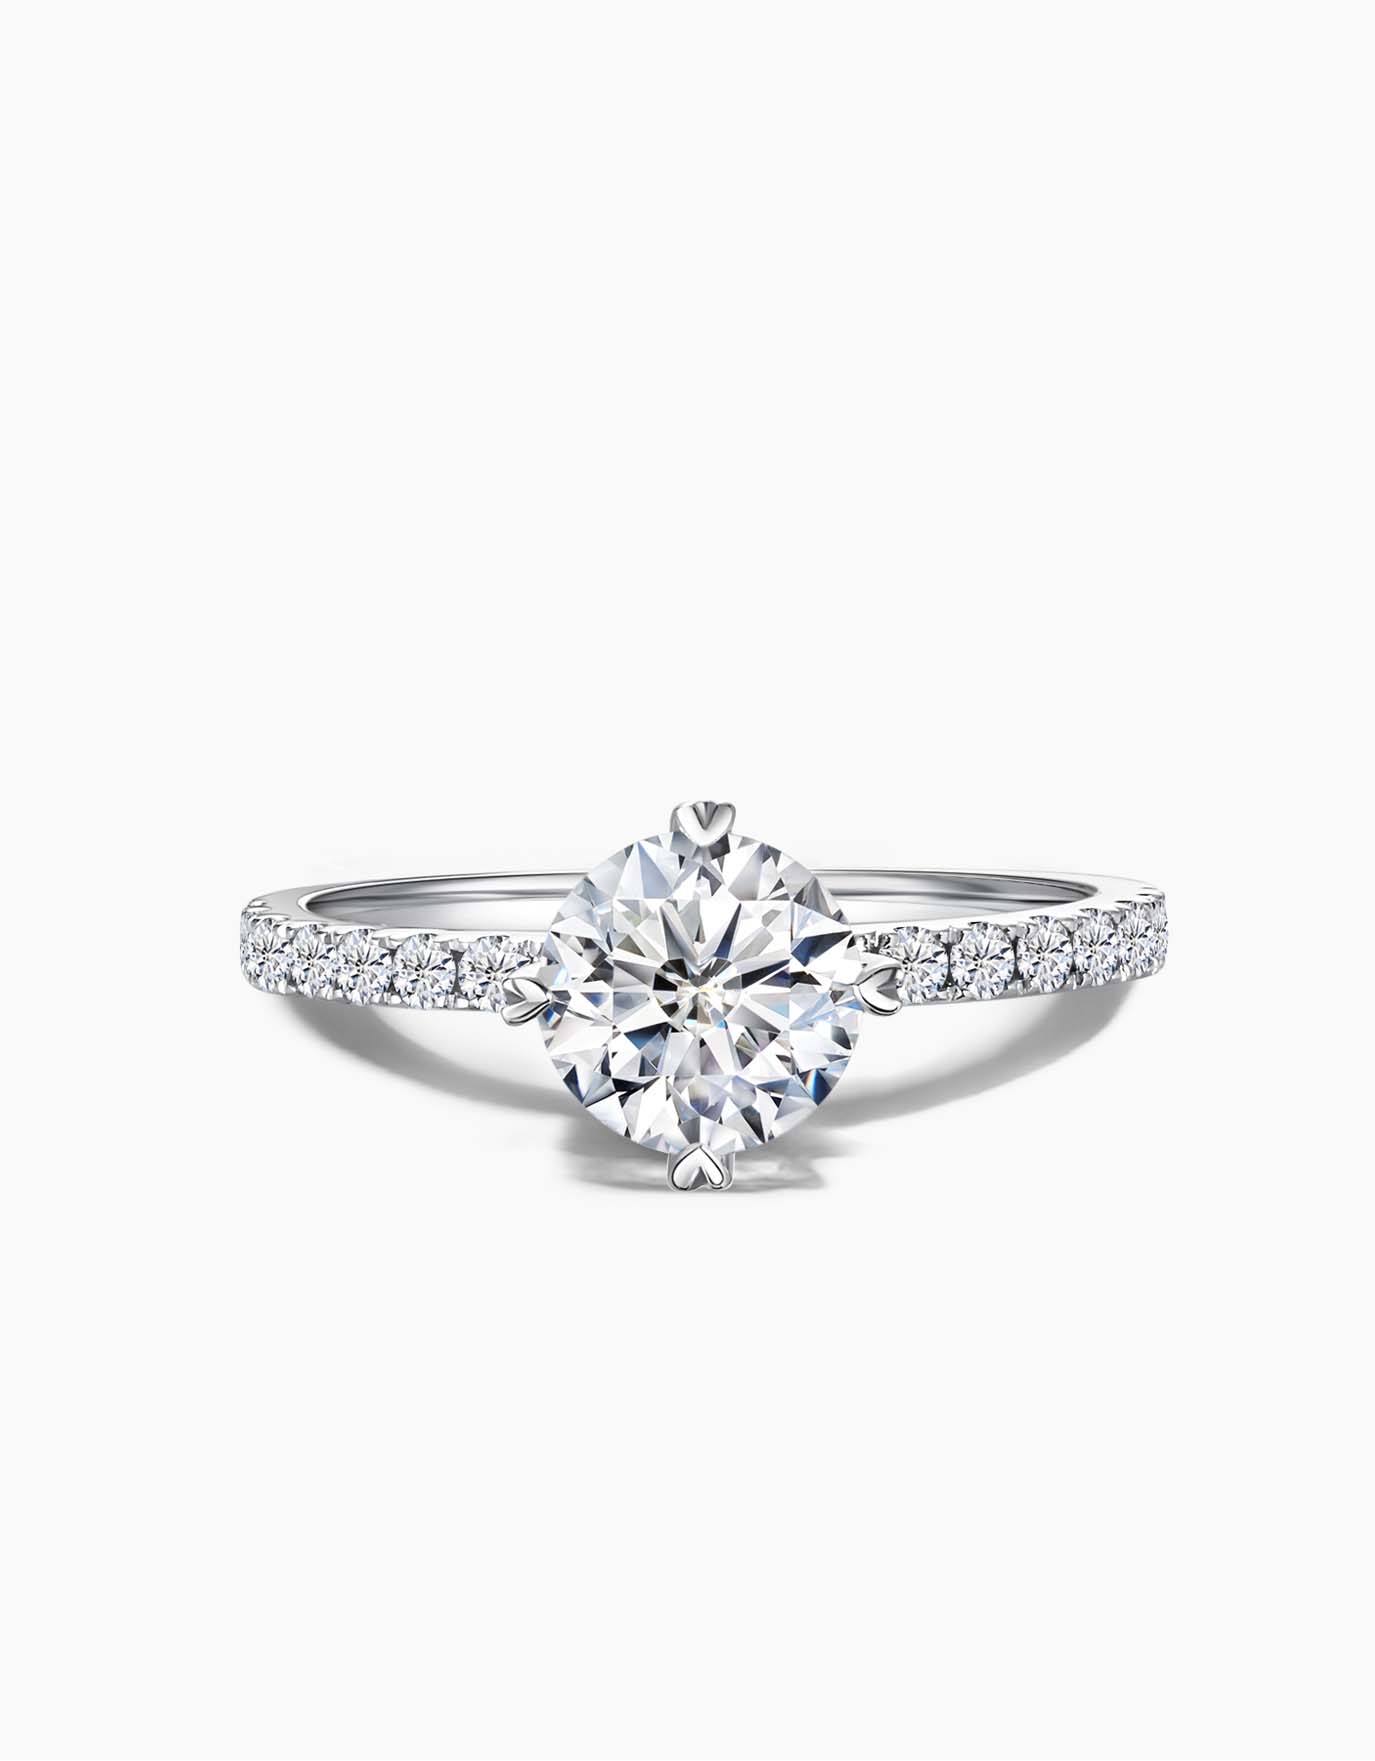 LVC Say Love™ Elena Diamond Ring - 1.0ct